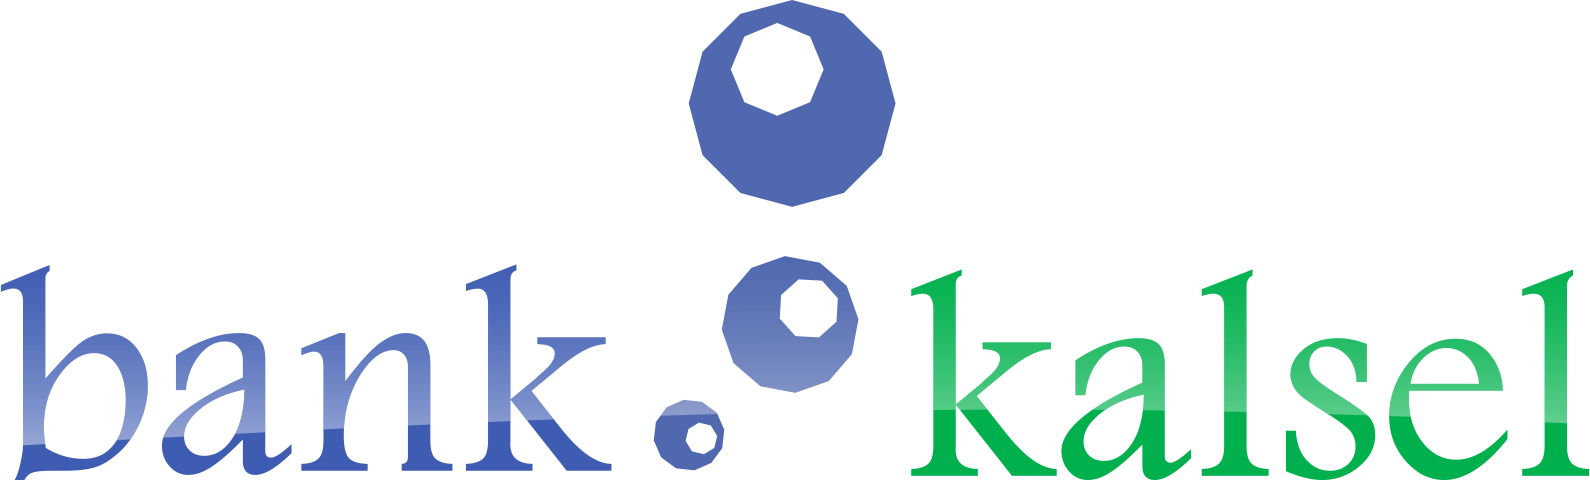 Bank Kalsel Logo (PNG-480p) - FileVector69